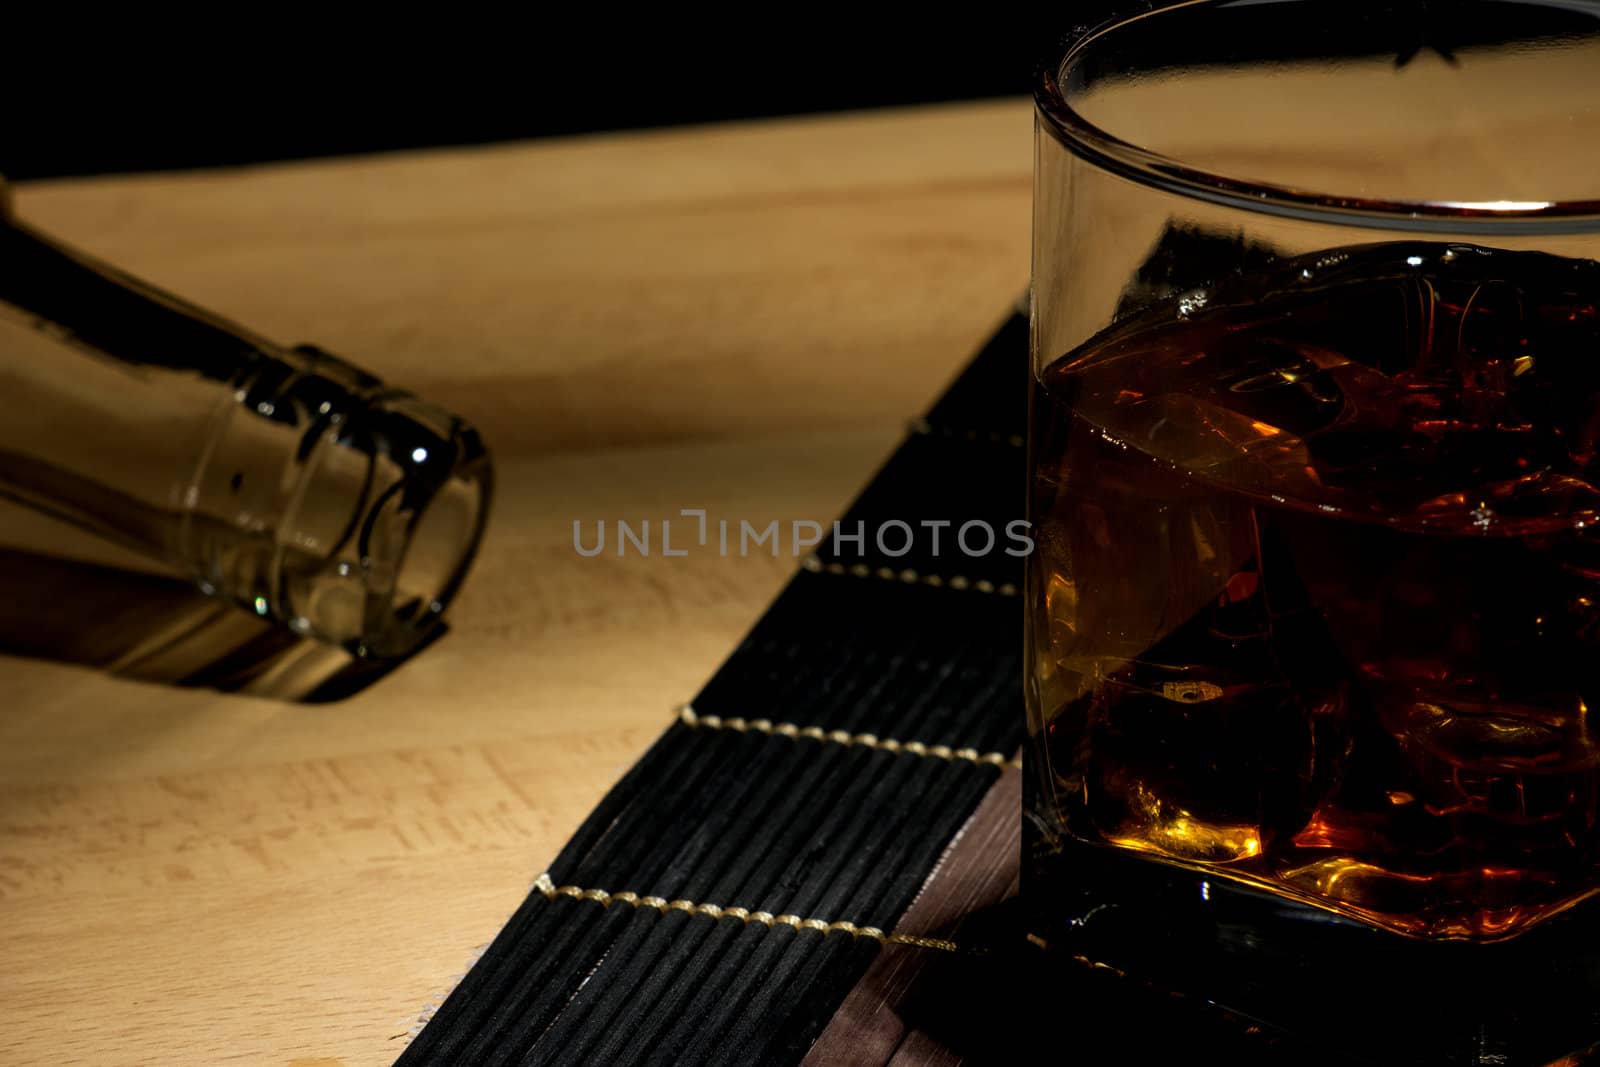 Old whiskey by Vladimir